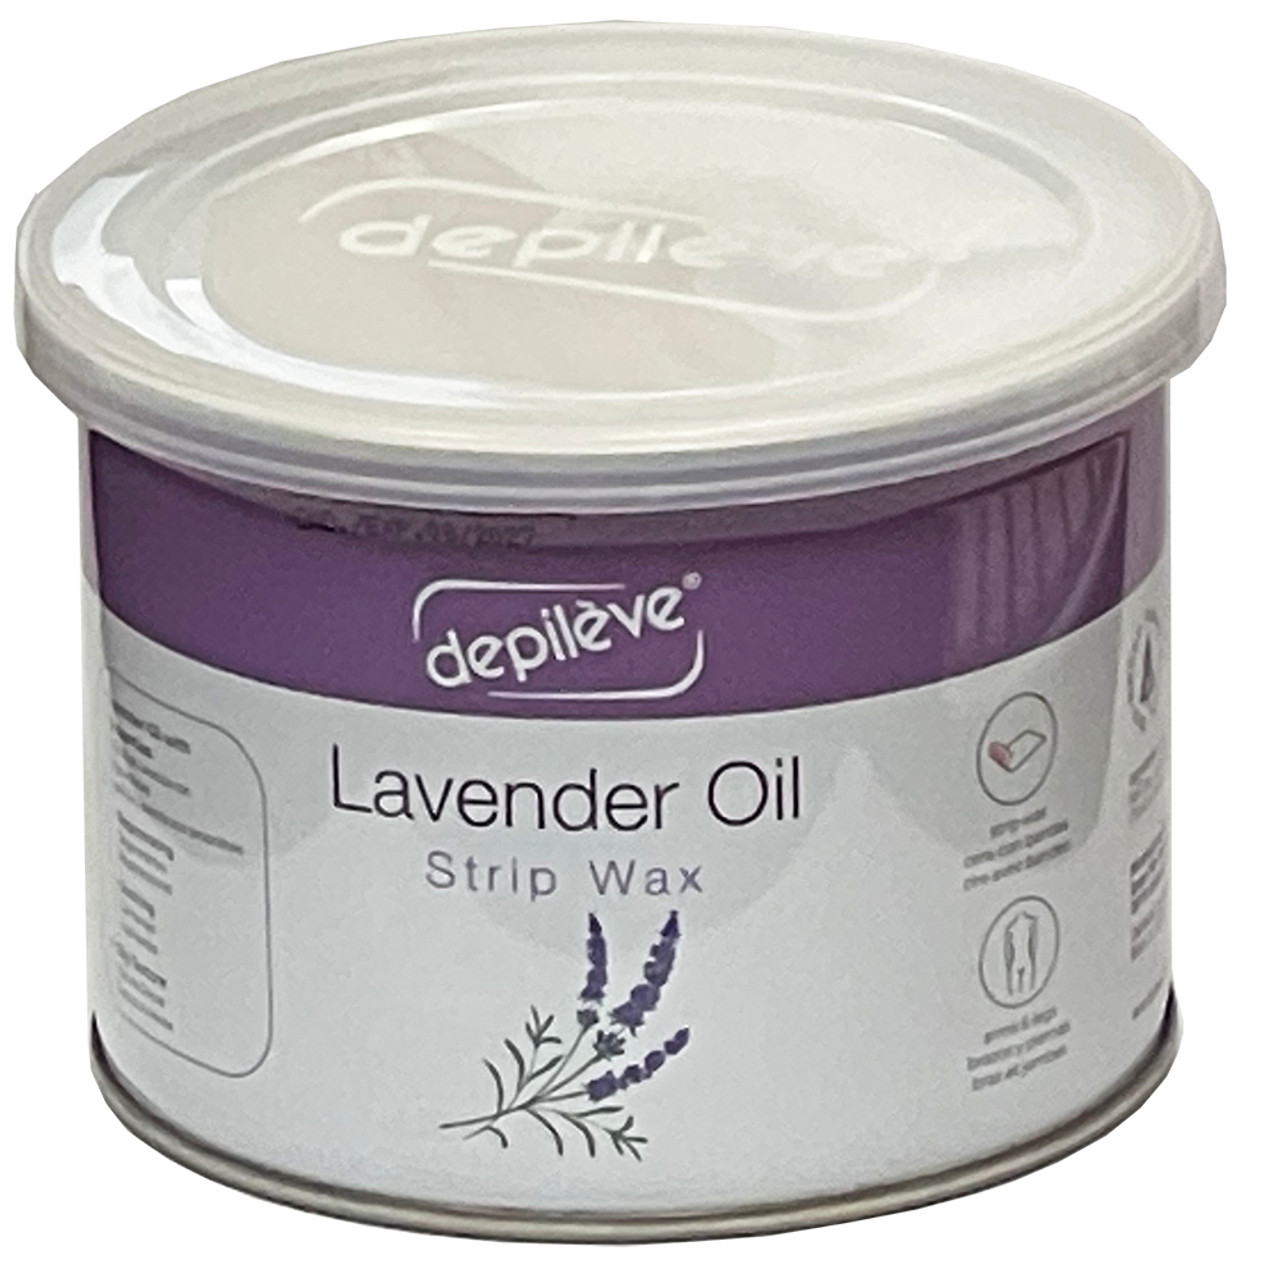 Depileve Lavender Oil Strip Wax - 13.52 fl oz